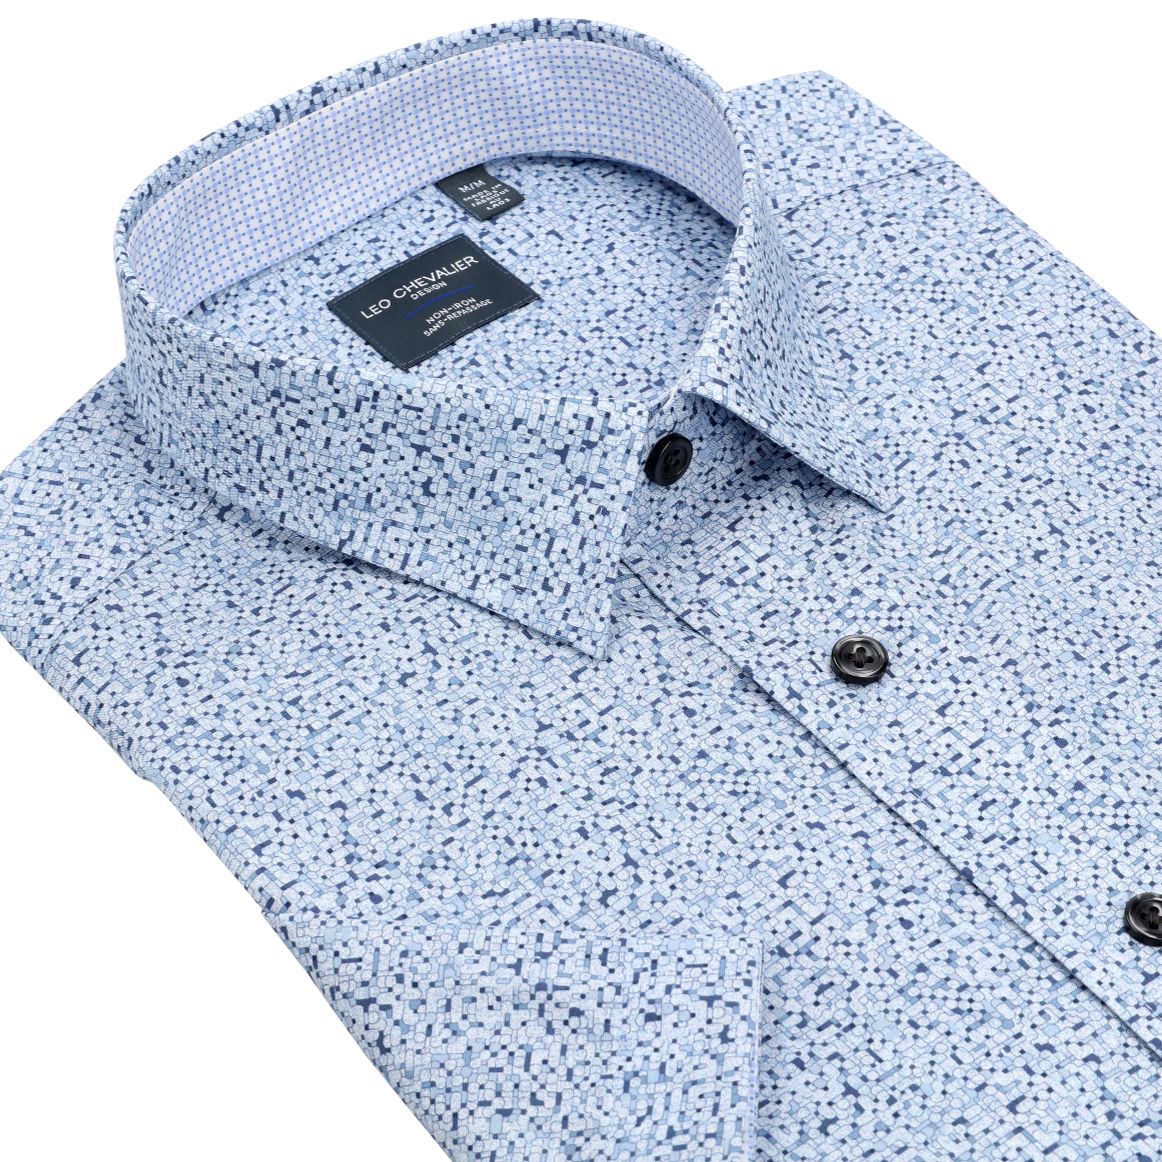 Sky Blue Geometric Print Short Sleeve No-Iron Cotton Sport Shirt with Hidden Button Down Collar by Leo Chevalier